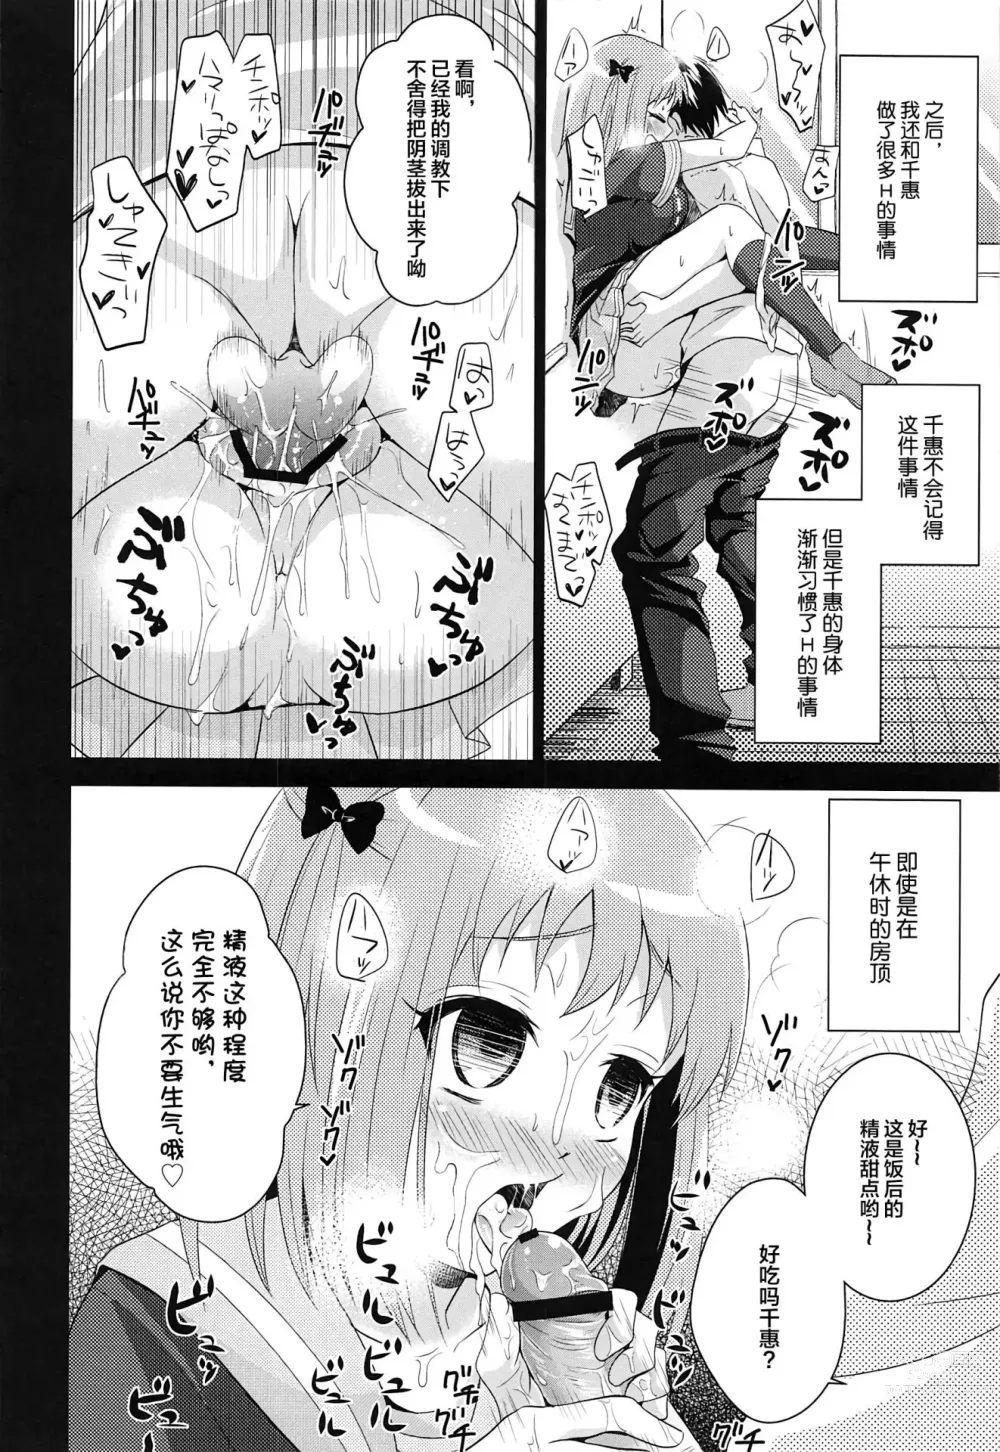 Page 7 of doujinshi 來和小千惠一起晚耍!